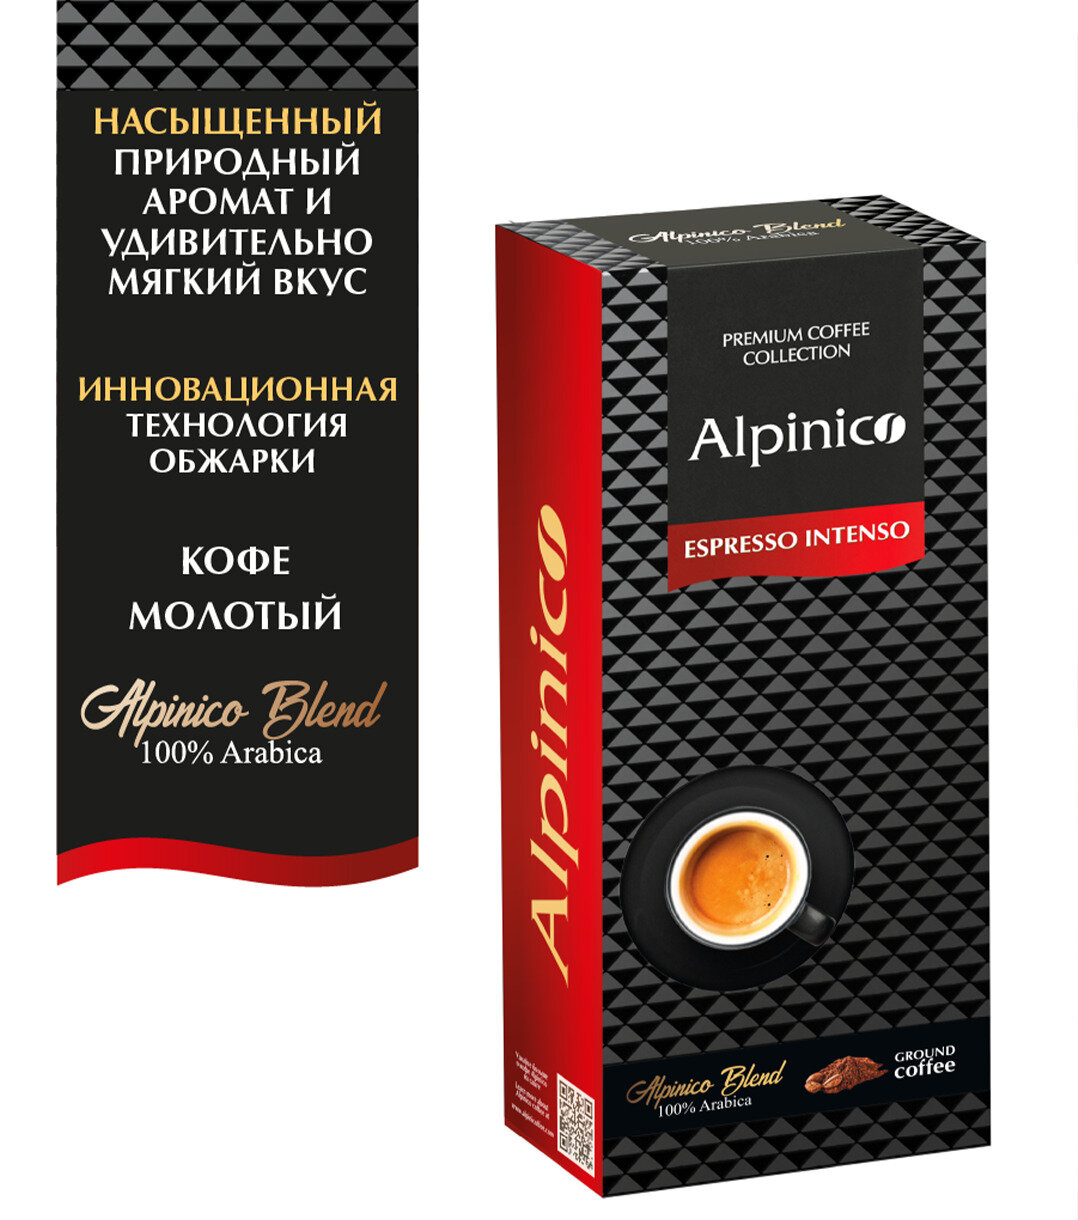 Кофe молотый Alpinico ESPRESSO INTENSO, 100% Аpaбика, темной обжapки, 250 г / молотый кoфе арабика